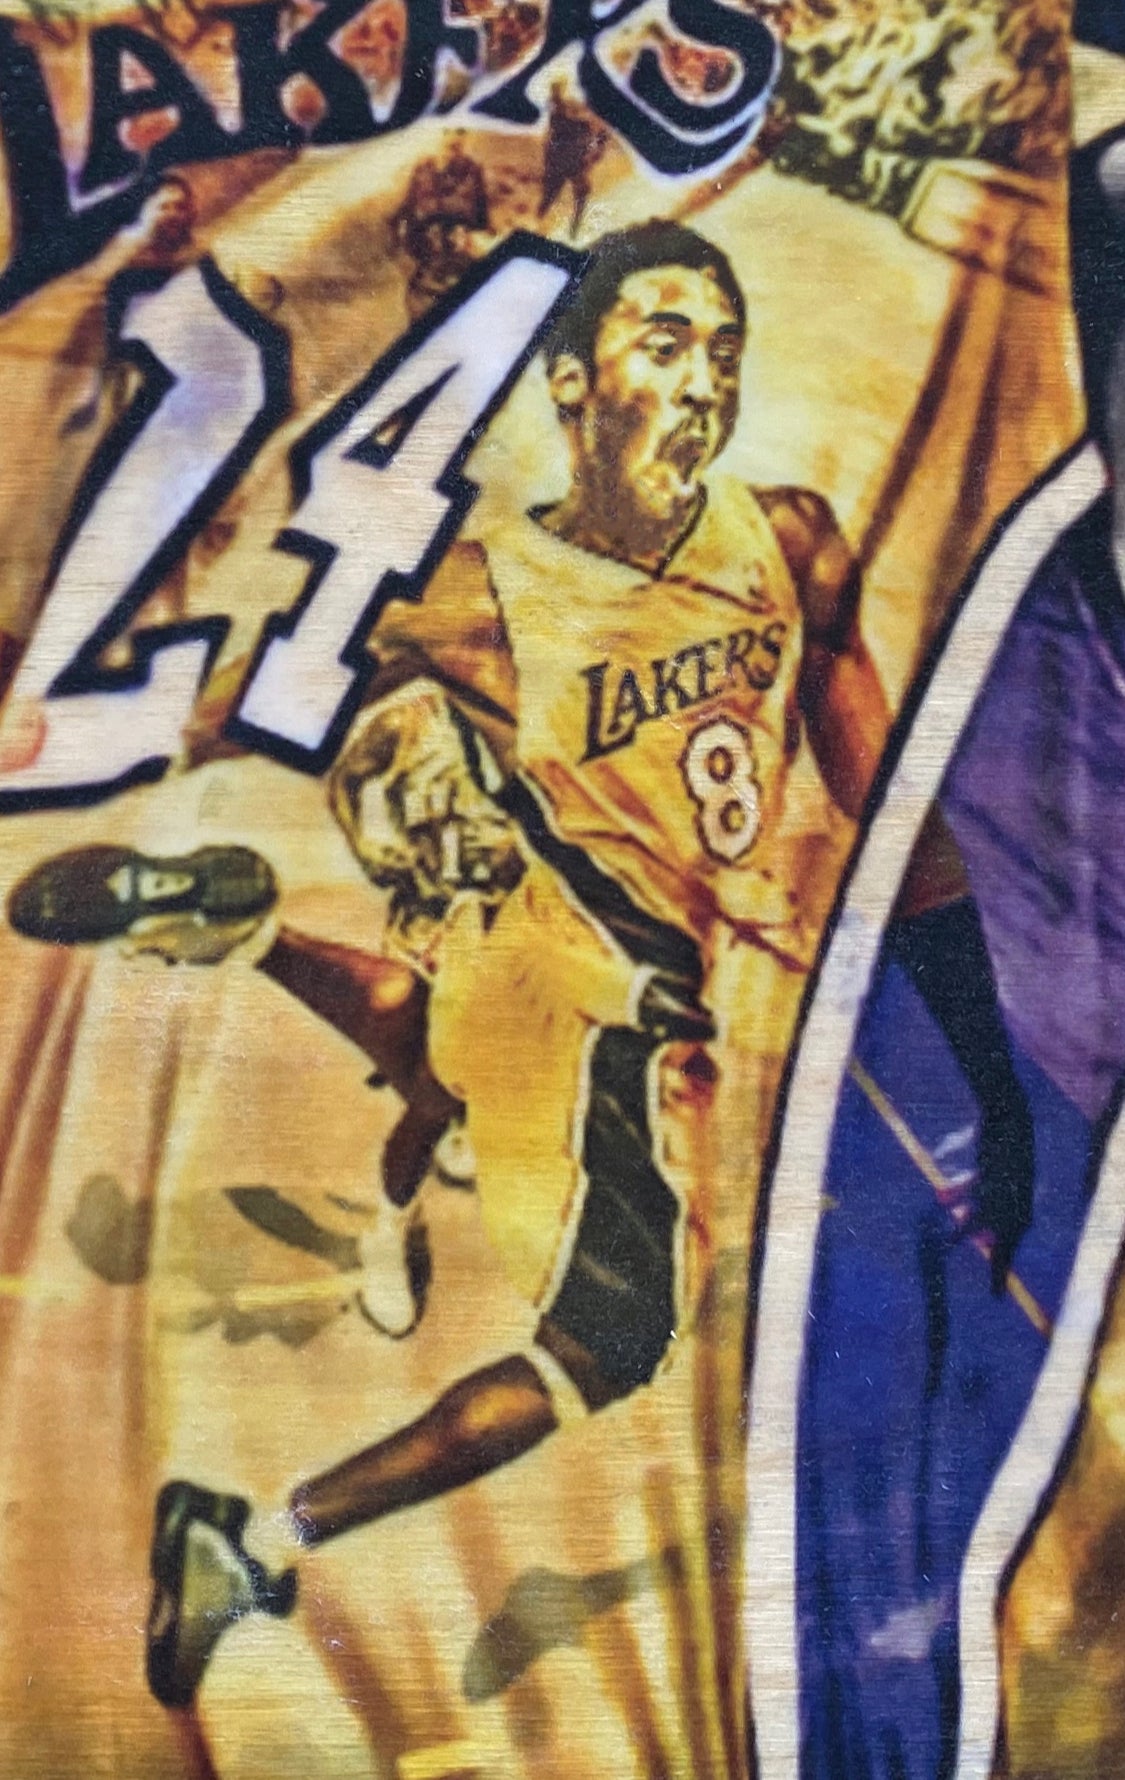 "Mamba Mentality" (Kobe Bryant) - Los Angeles Lakers - Mixed Media Original on Wood